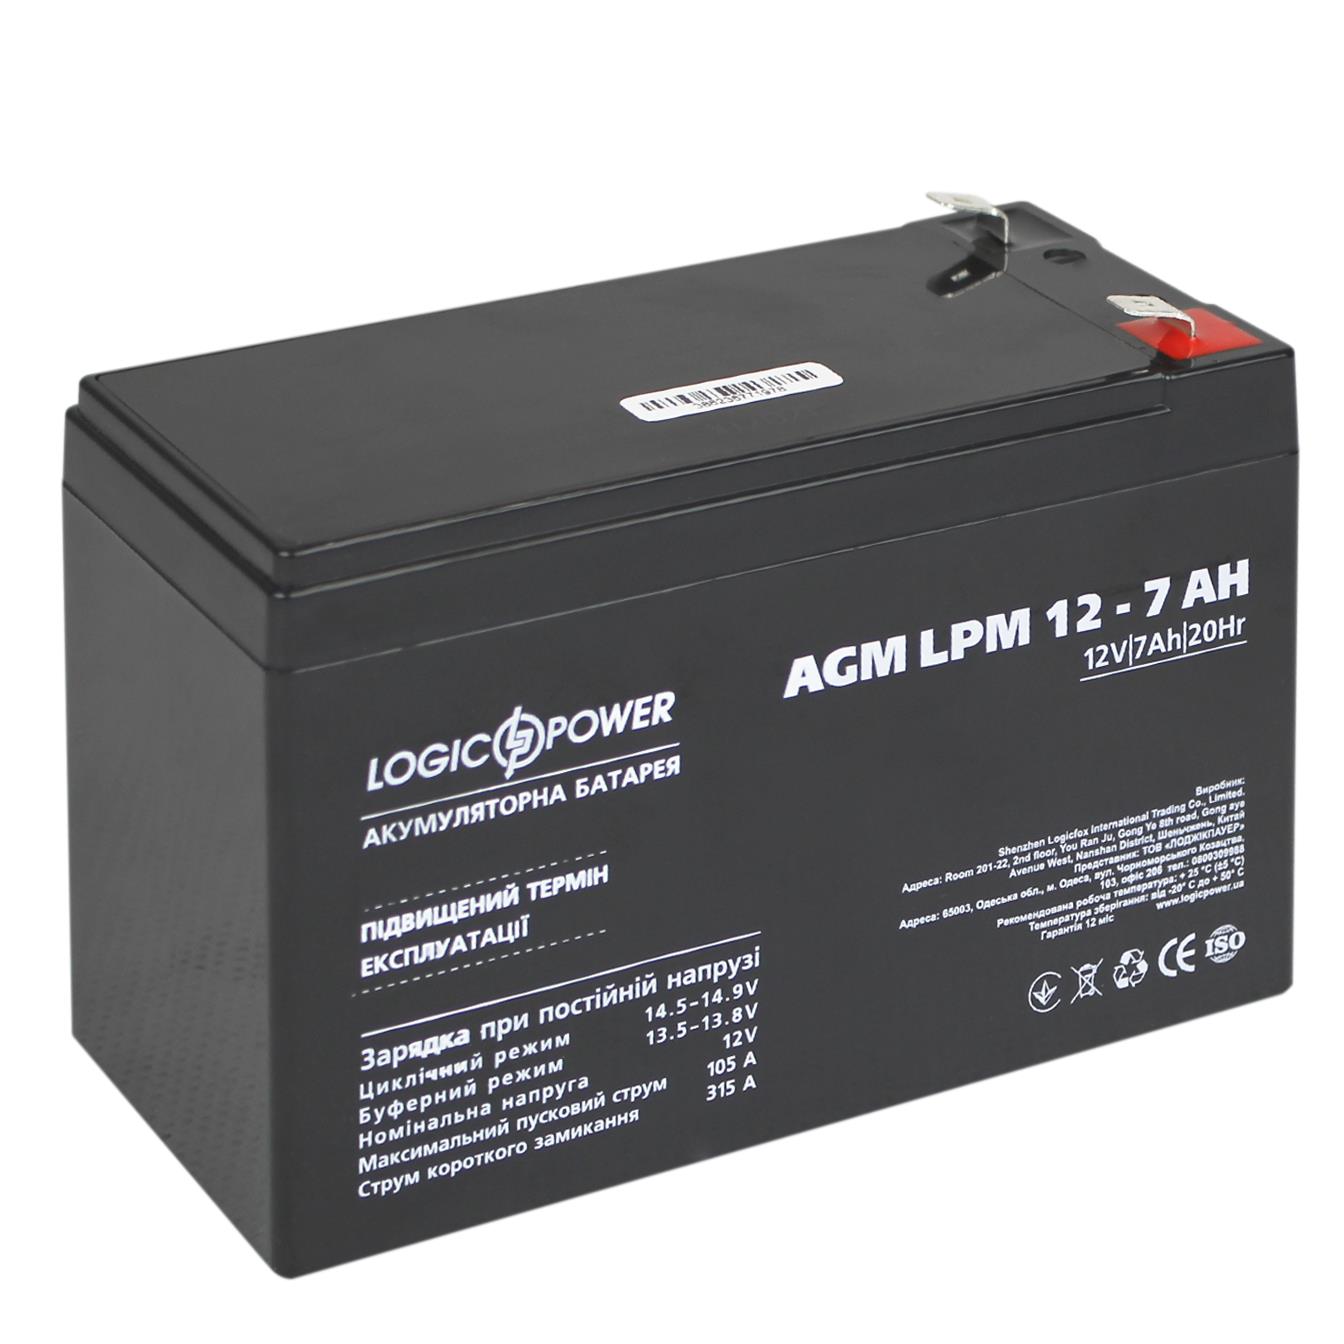 Аккумулятор свинцово-кислотный LogicPower AGM LPM 12V - 7 Ah (3862) цена 575 грн - фотография 2